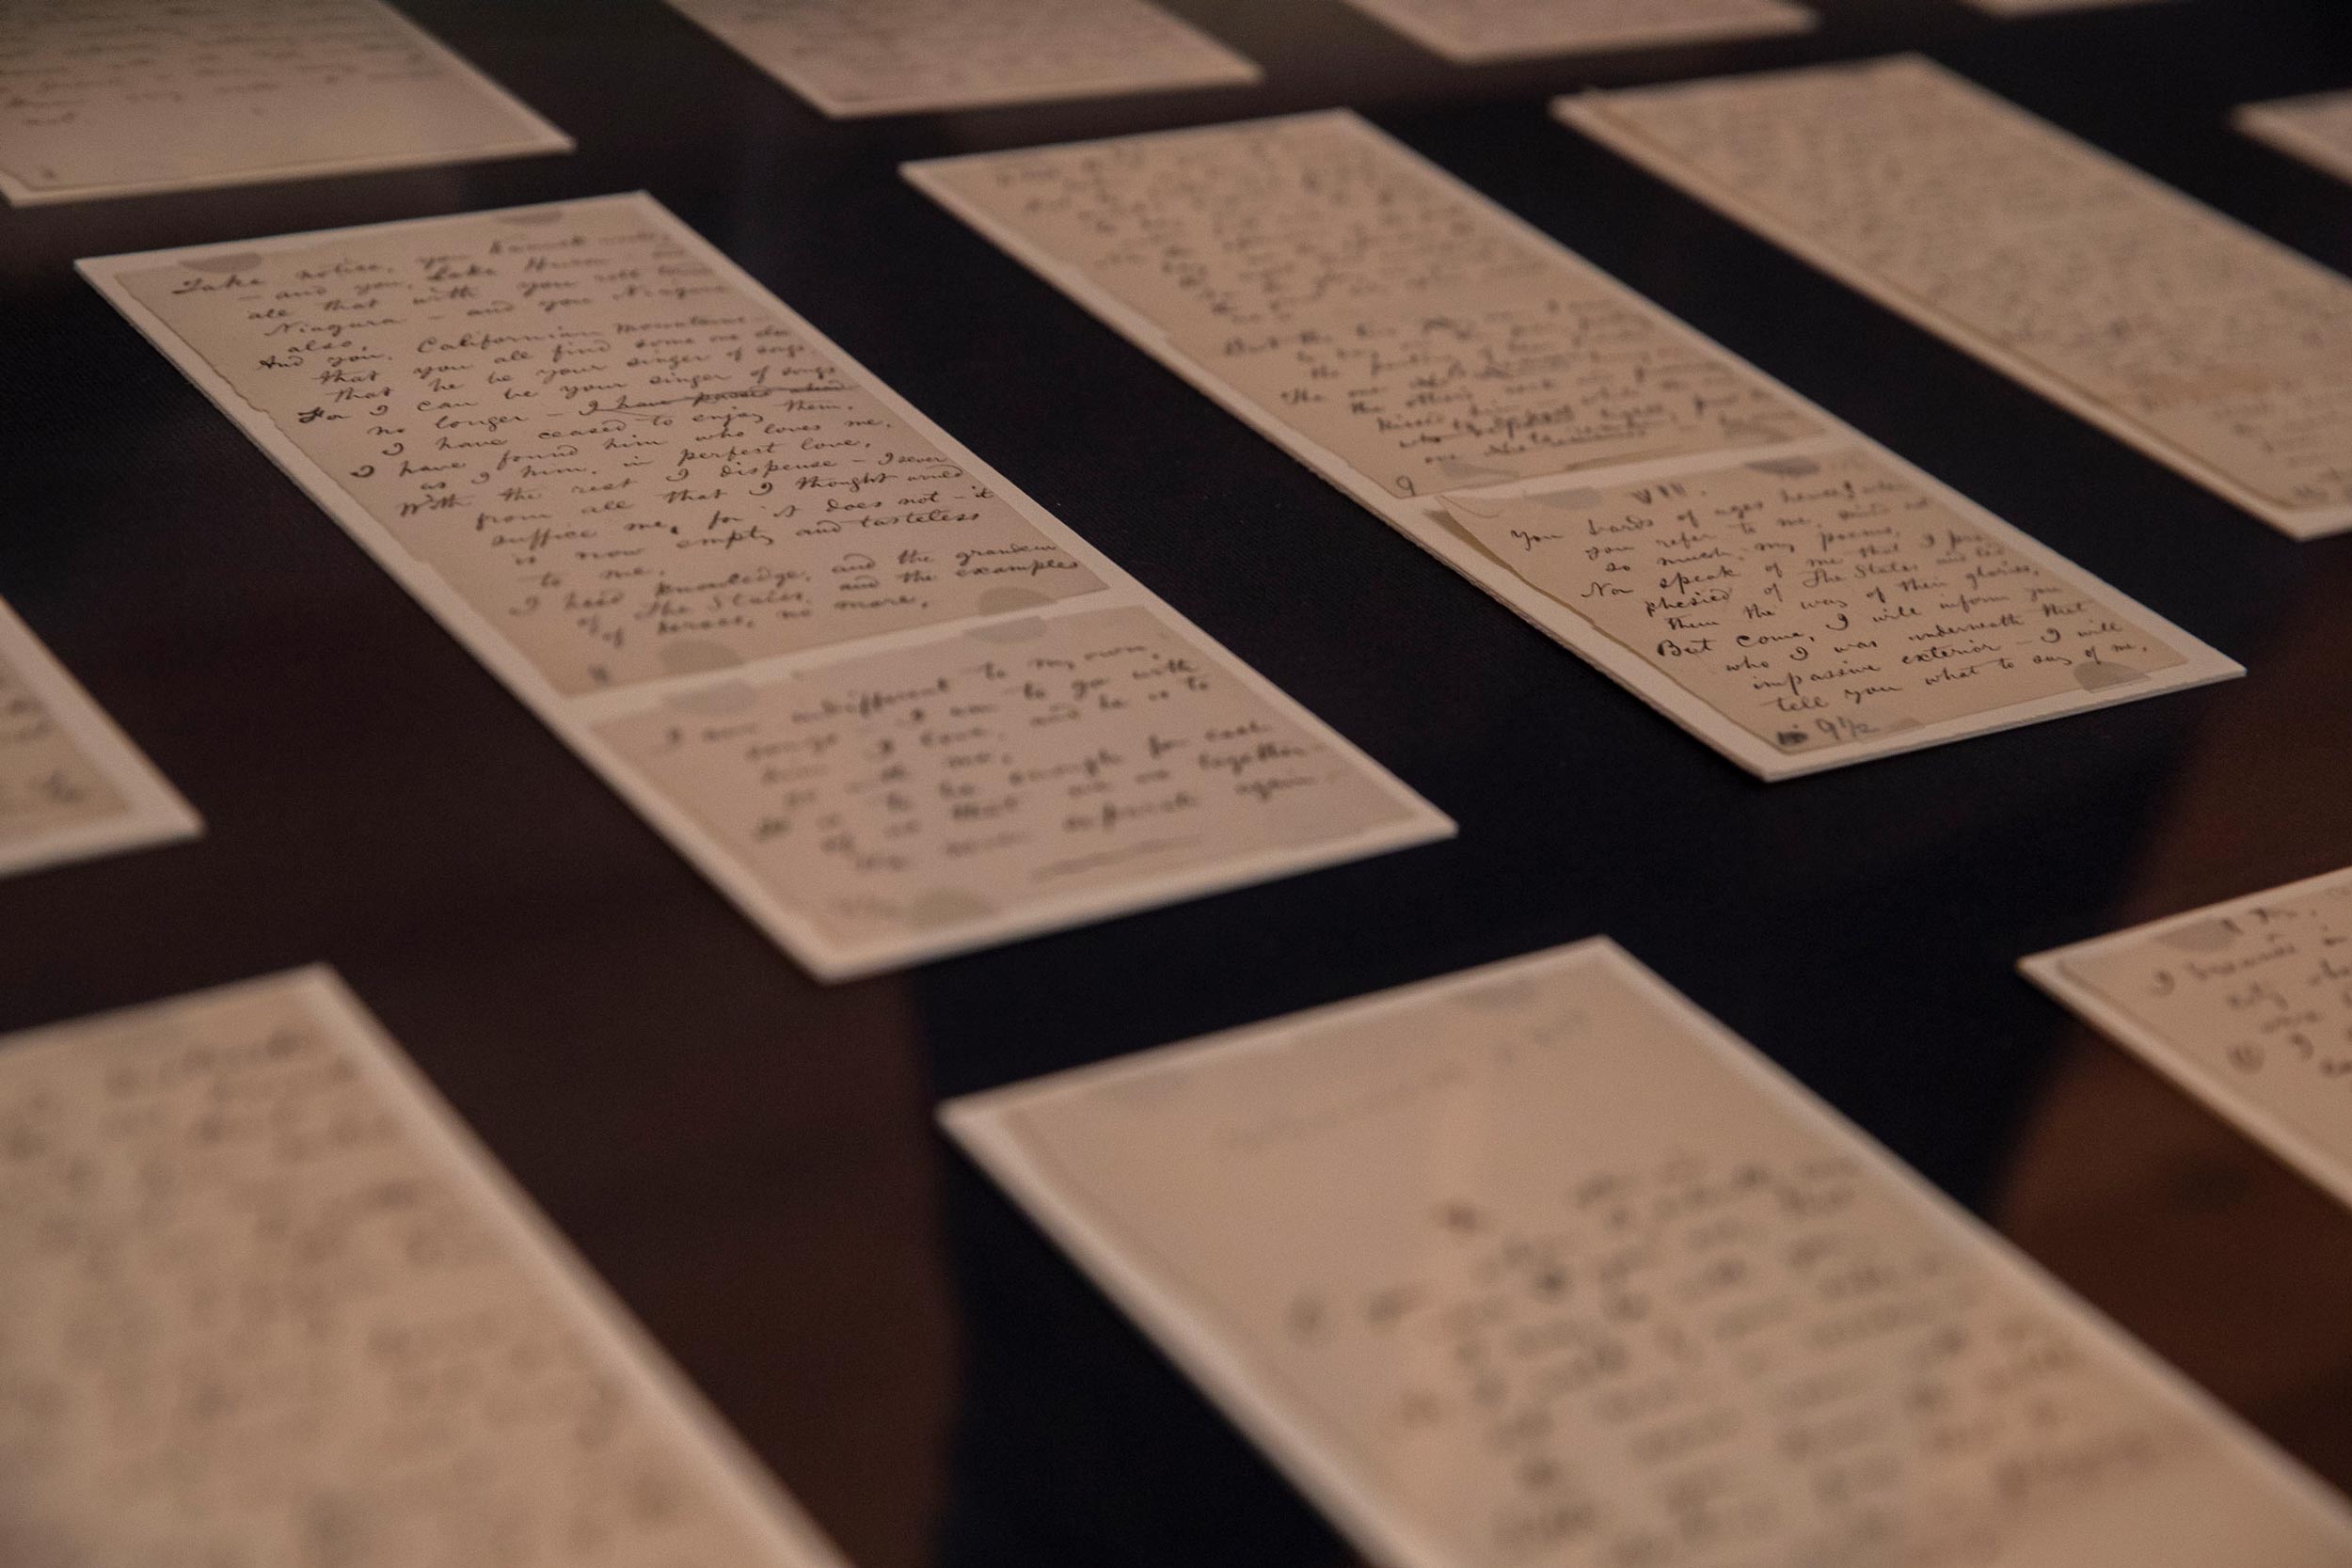 handwritten notes by Walt Whitman